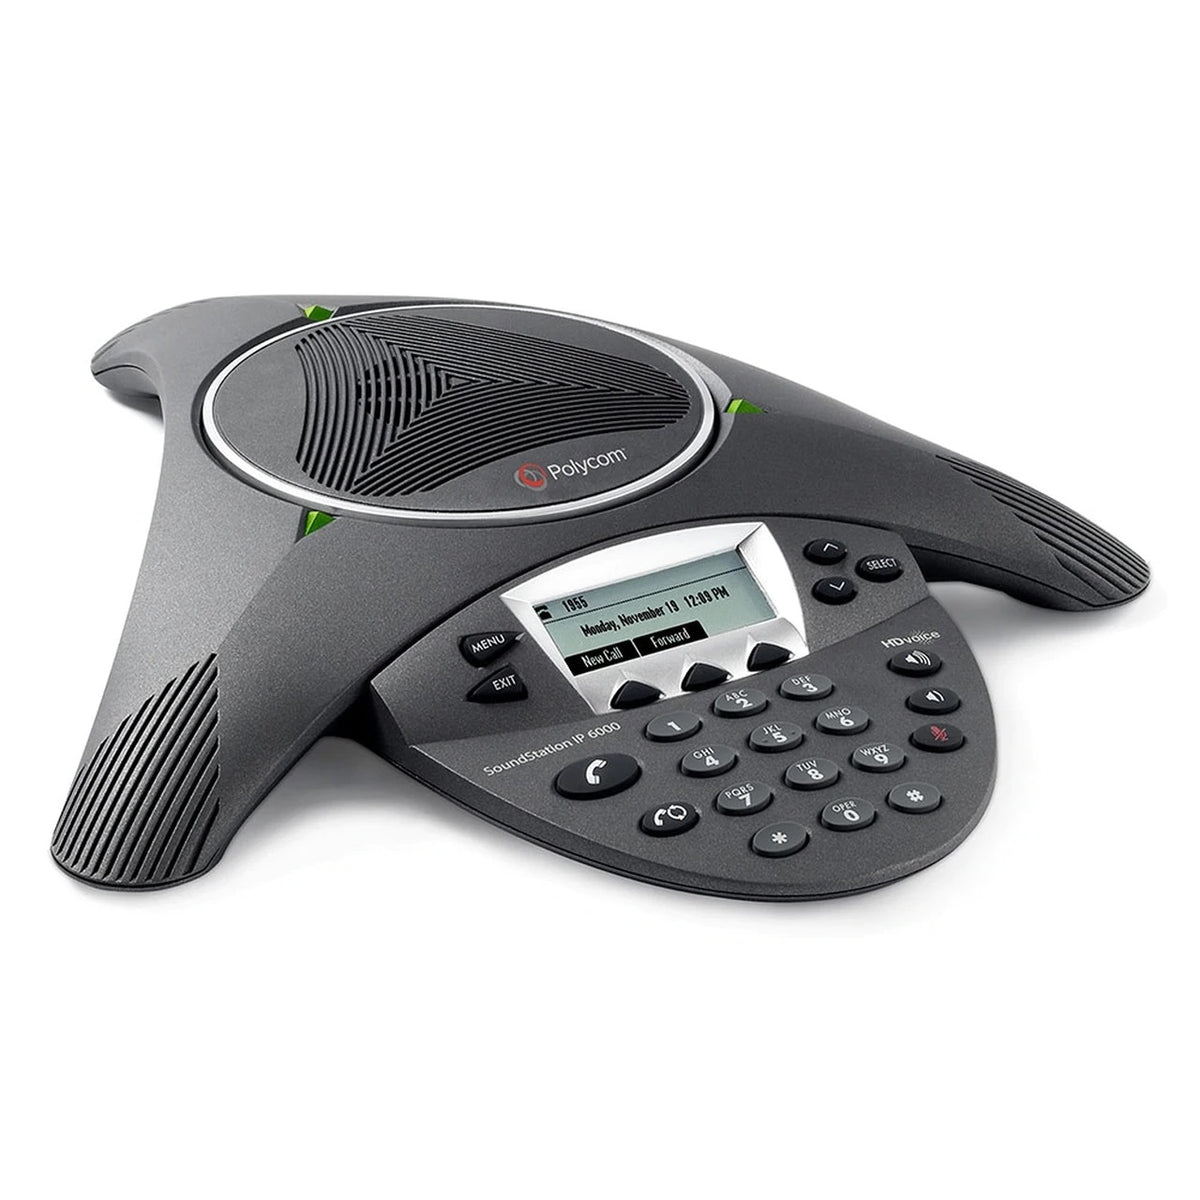 polycom-soundstation-ip-6000-conference-phone-2200-15600-001-front